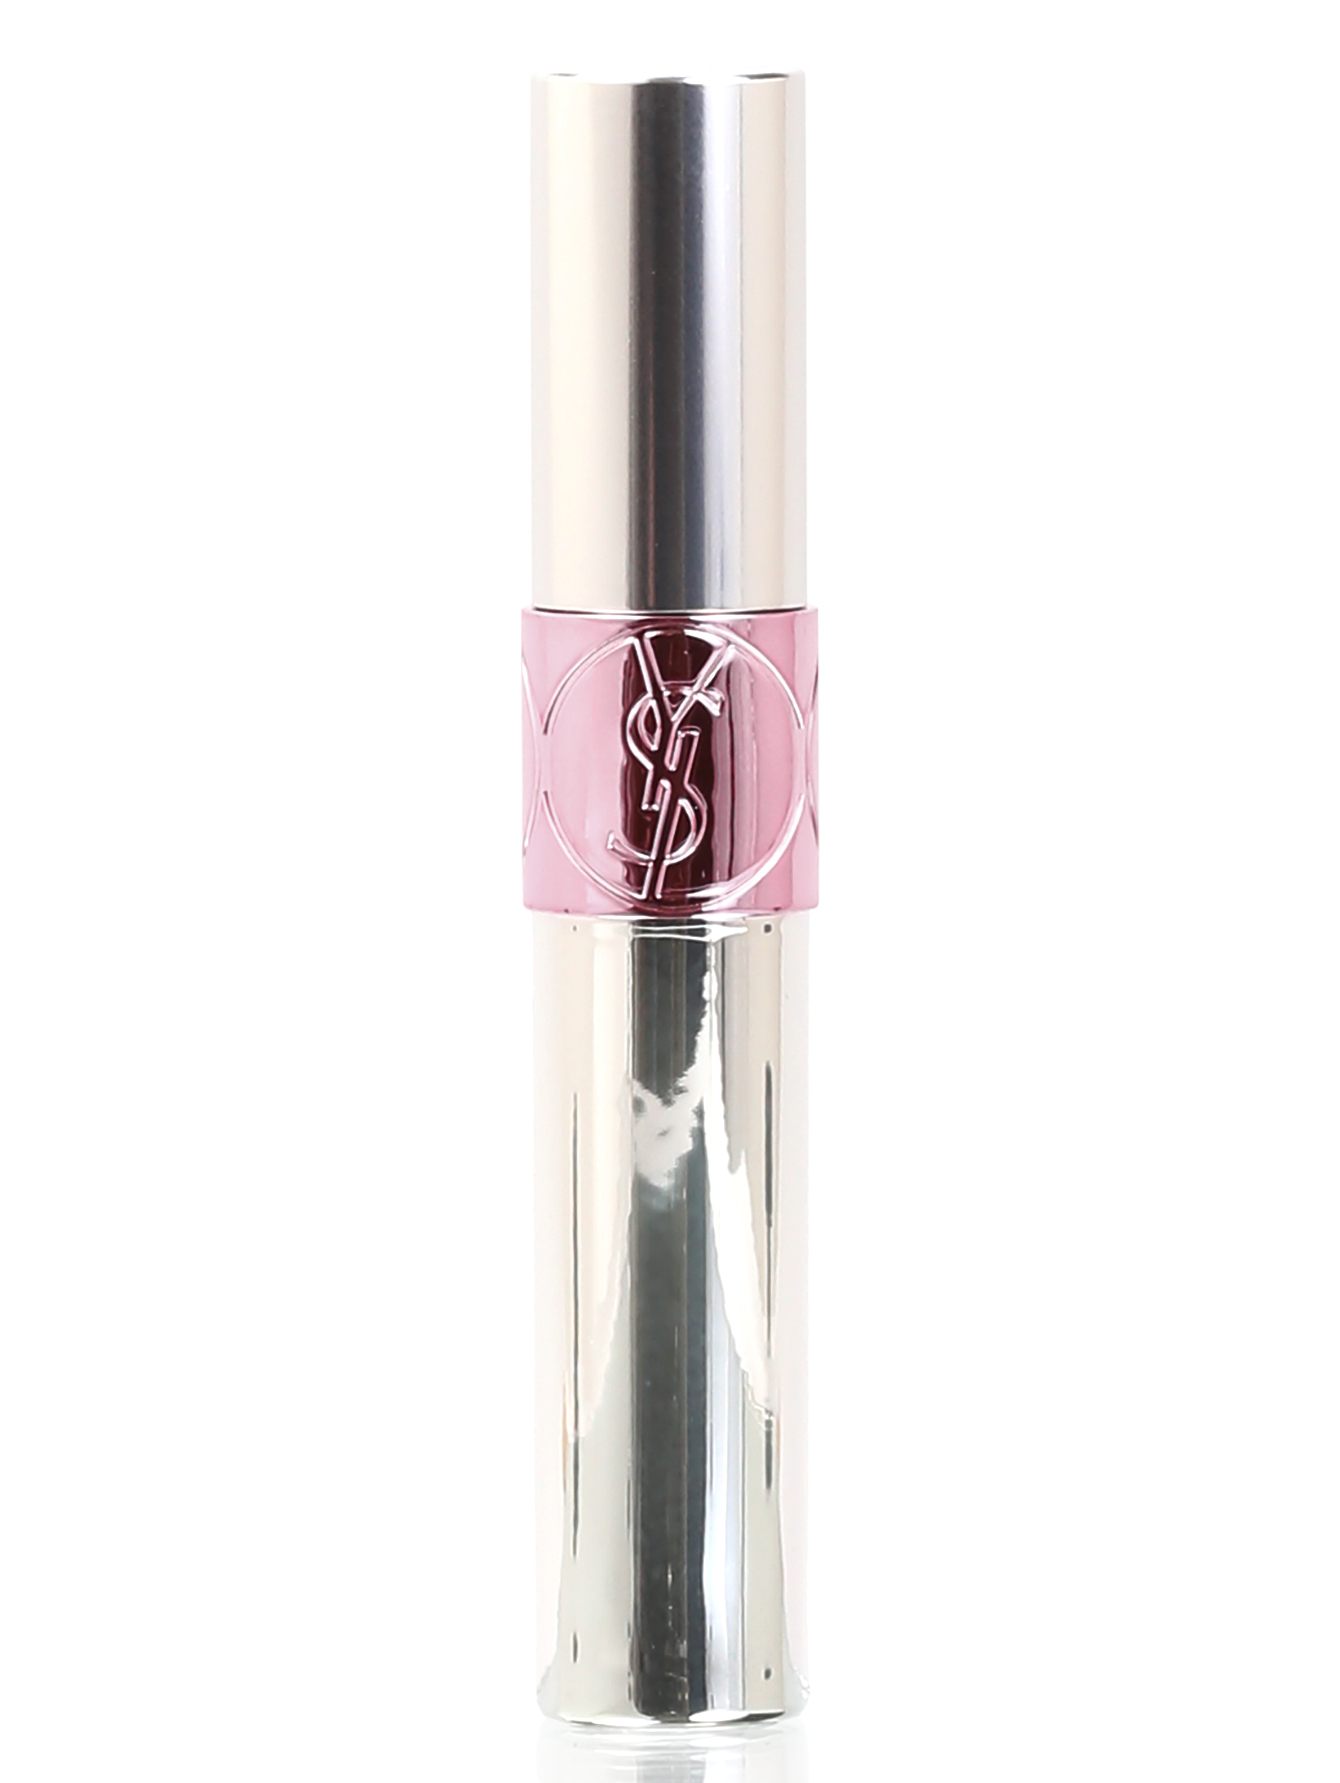 Масло-бальзам для губ - №4 Розовый,Tint-in-oil, 6ml - Общий вид